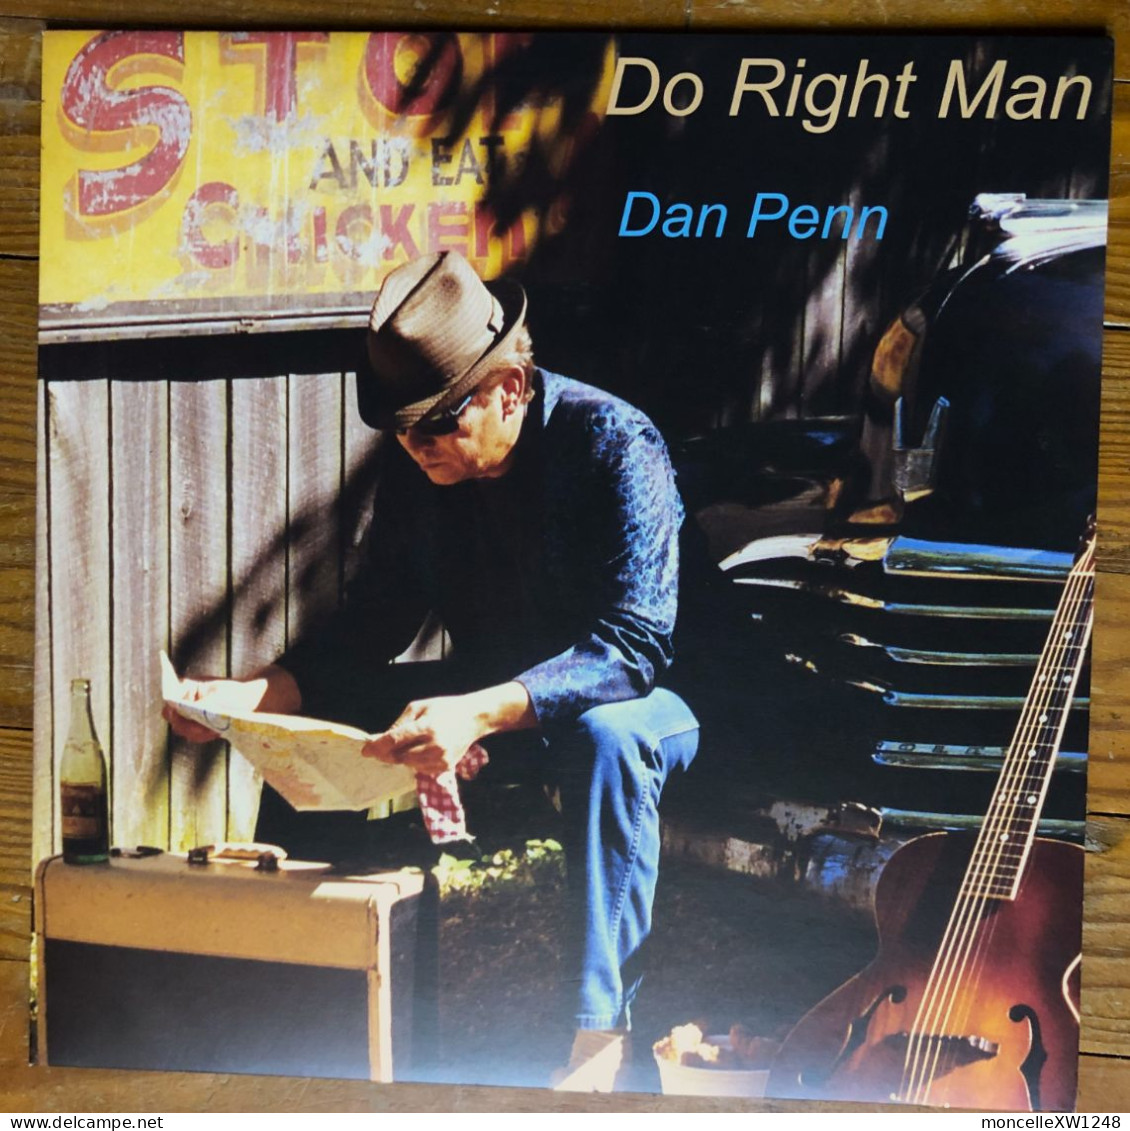 Dan Penn - 33 T LP Do Right Man (2013) - Country En Folk